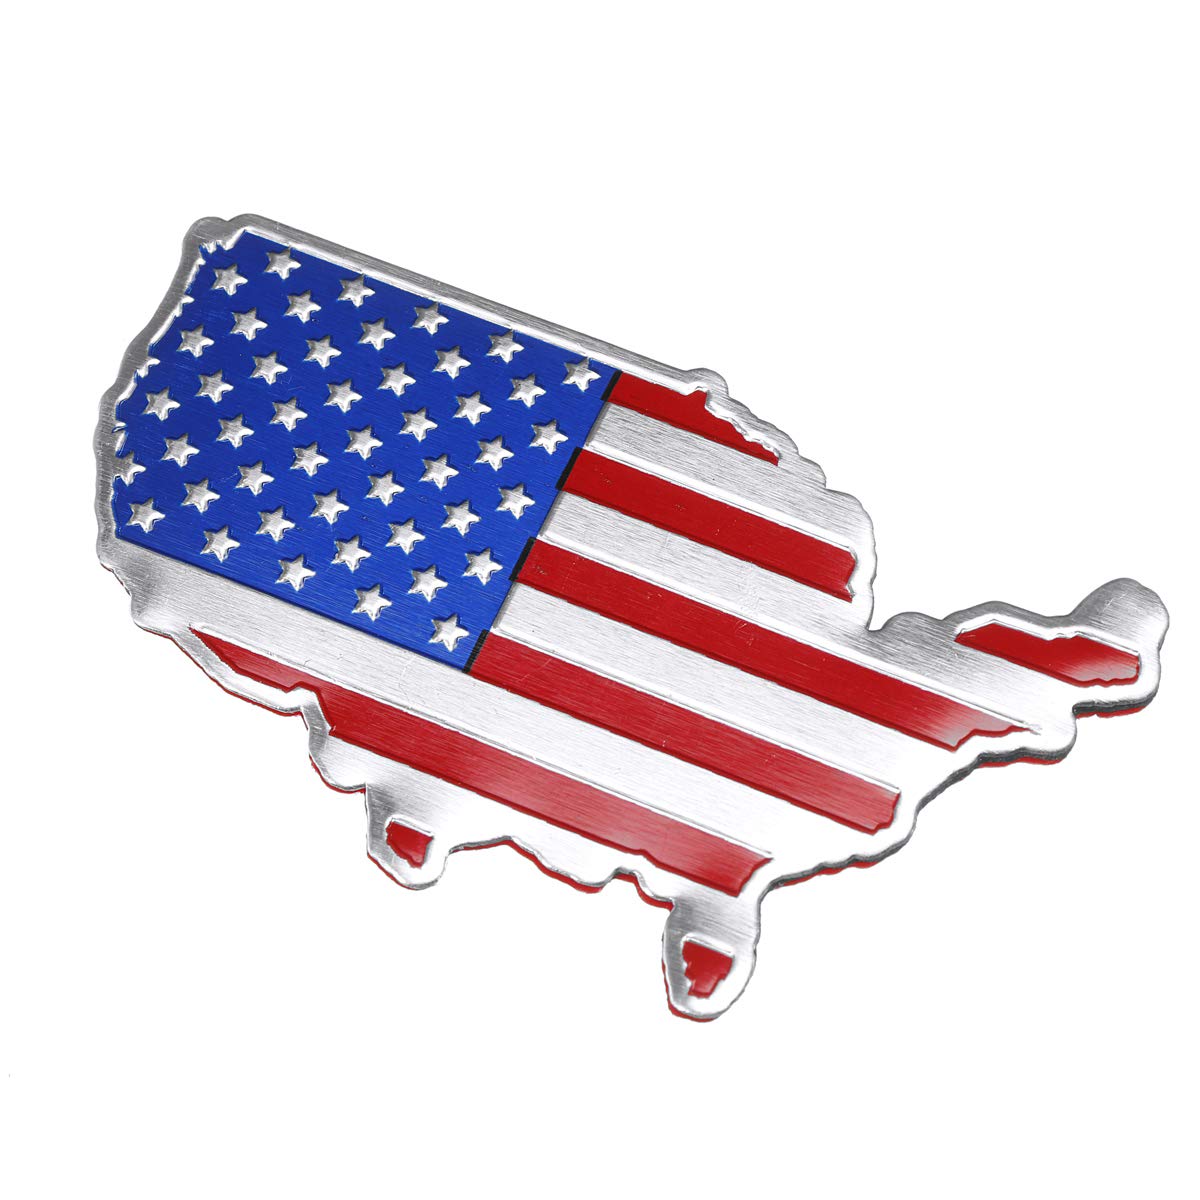 YONGYAO 3D Auto Auto Aufkleber Metall Usa Usa Amerikanische Karte Flagge Aufkleber Emblem von YONGYAO